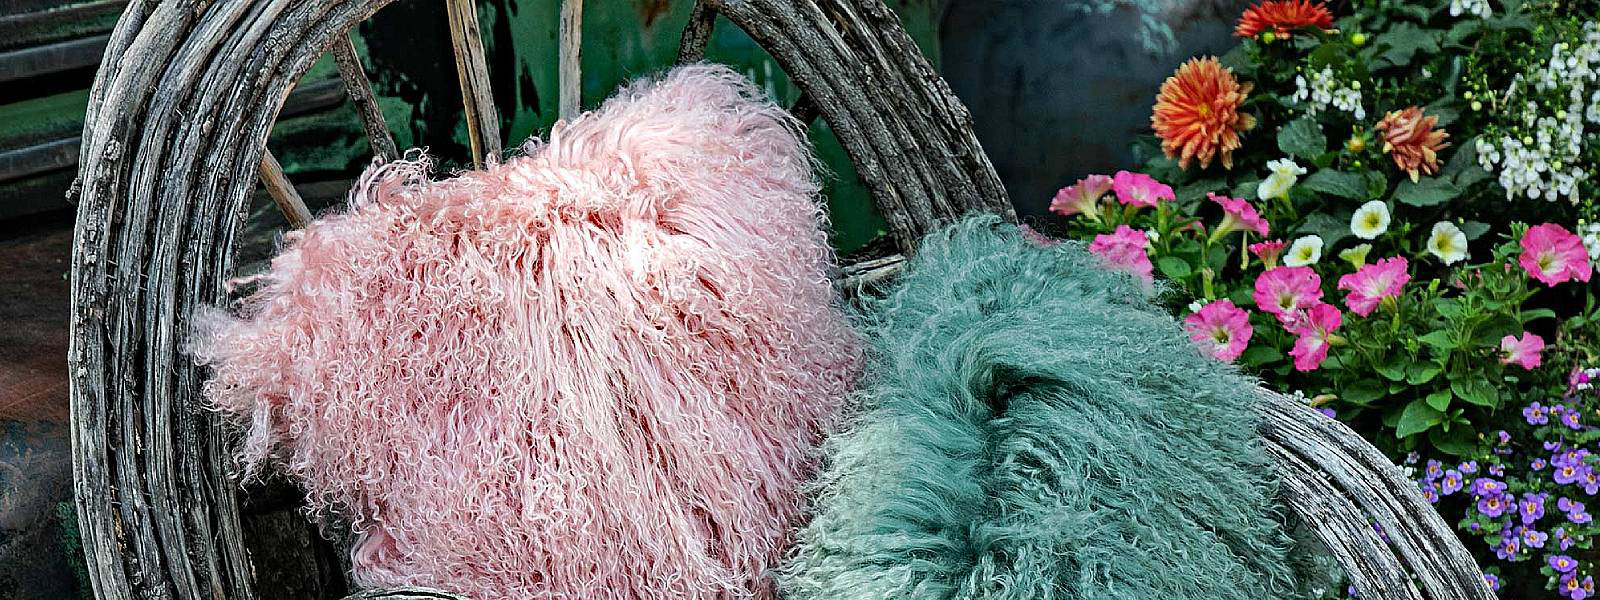 Sheepskin, mother nature's most versatile fibre - Fibre by Auskin